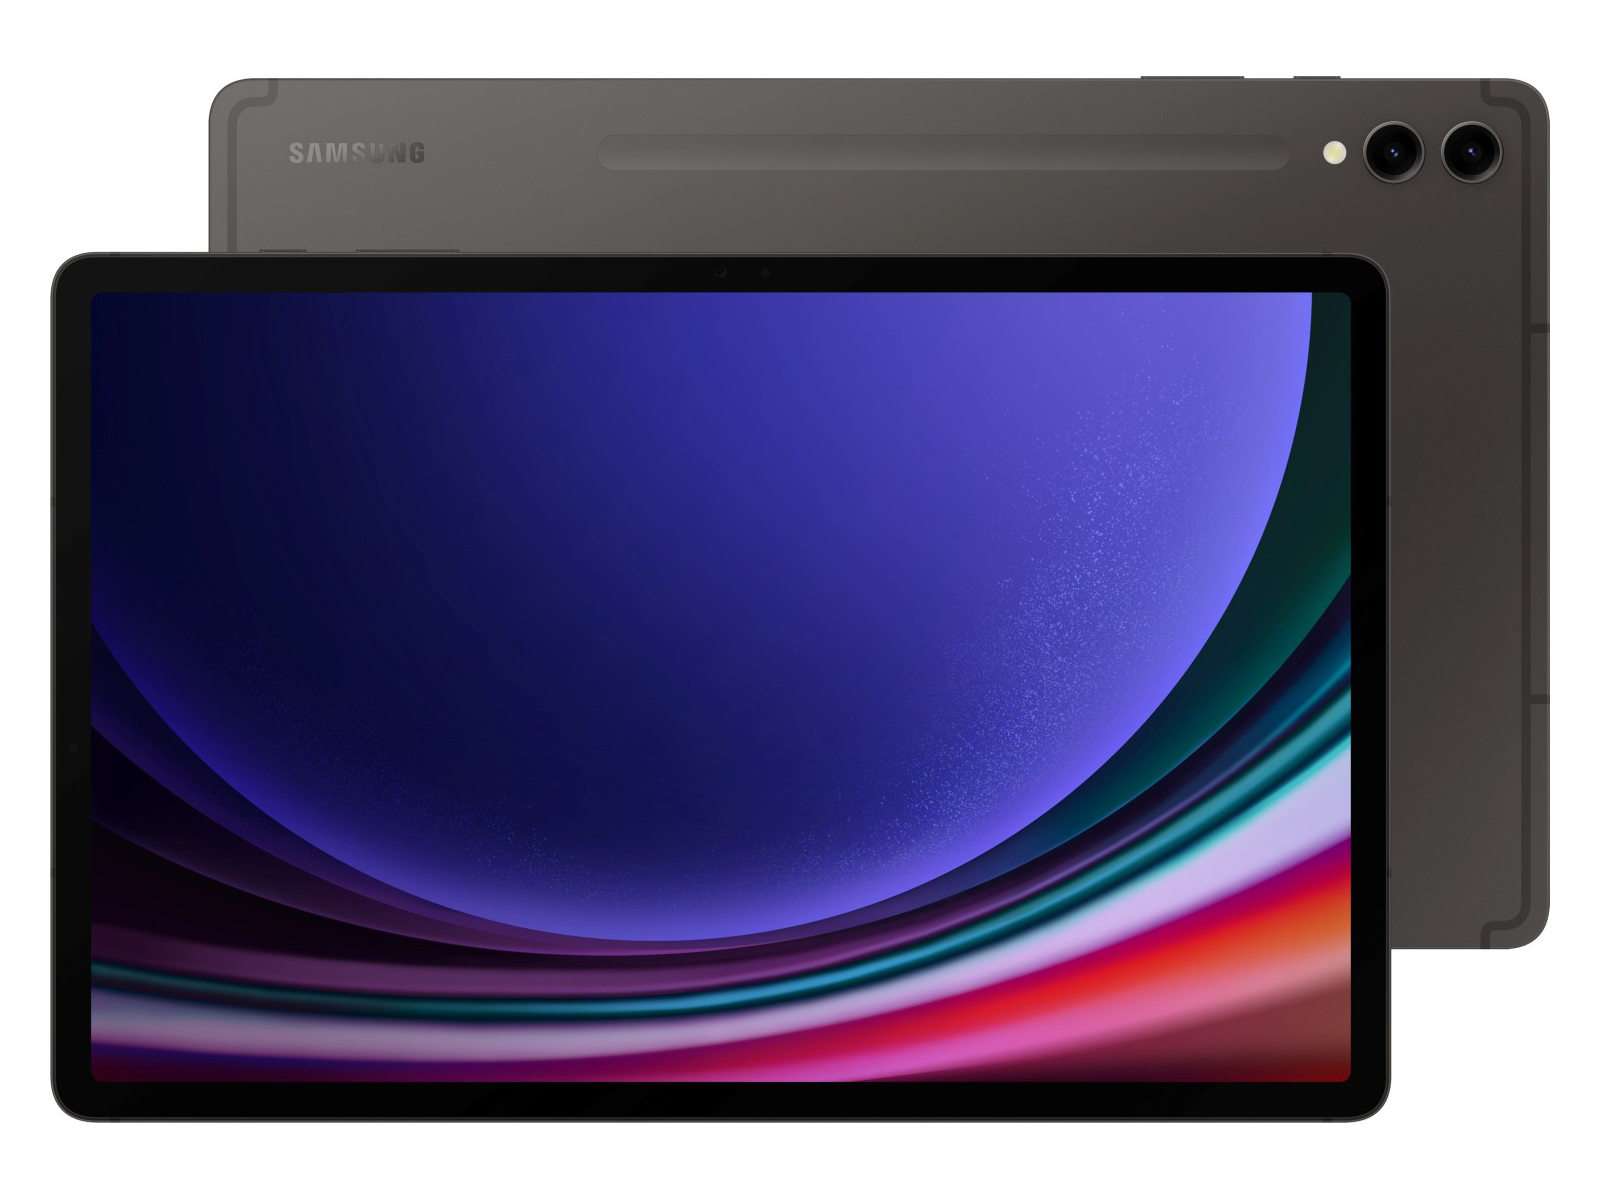 Samsung Galaxy Tab S6 : la meilleure tablette Android est 100 € moins cher